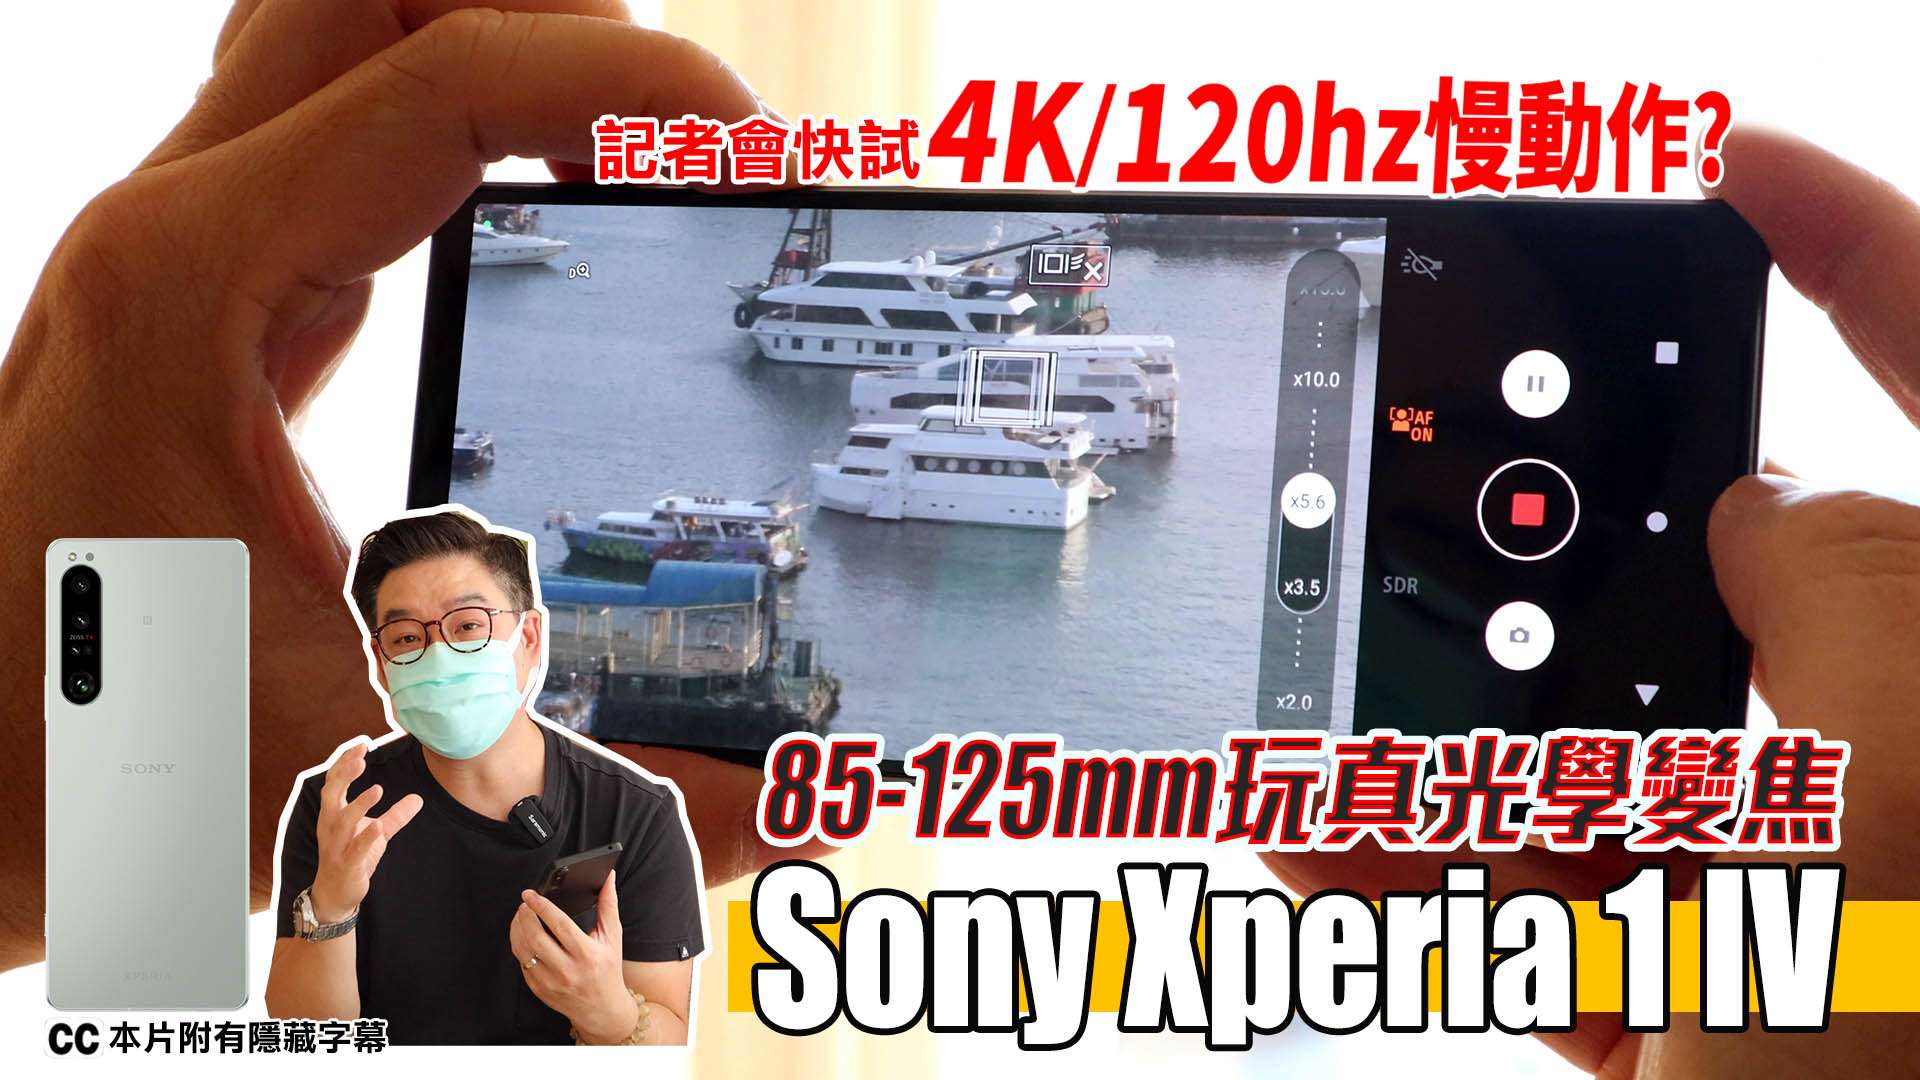 Sony Xperia 1 IV Press testing forum copy.jpg